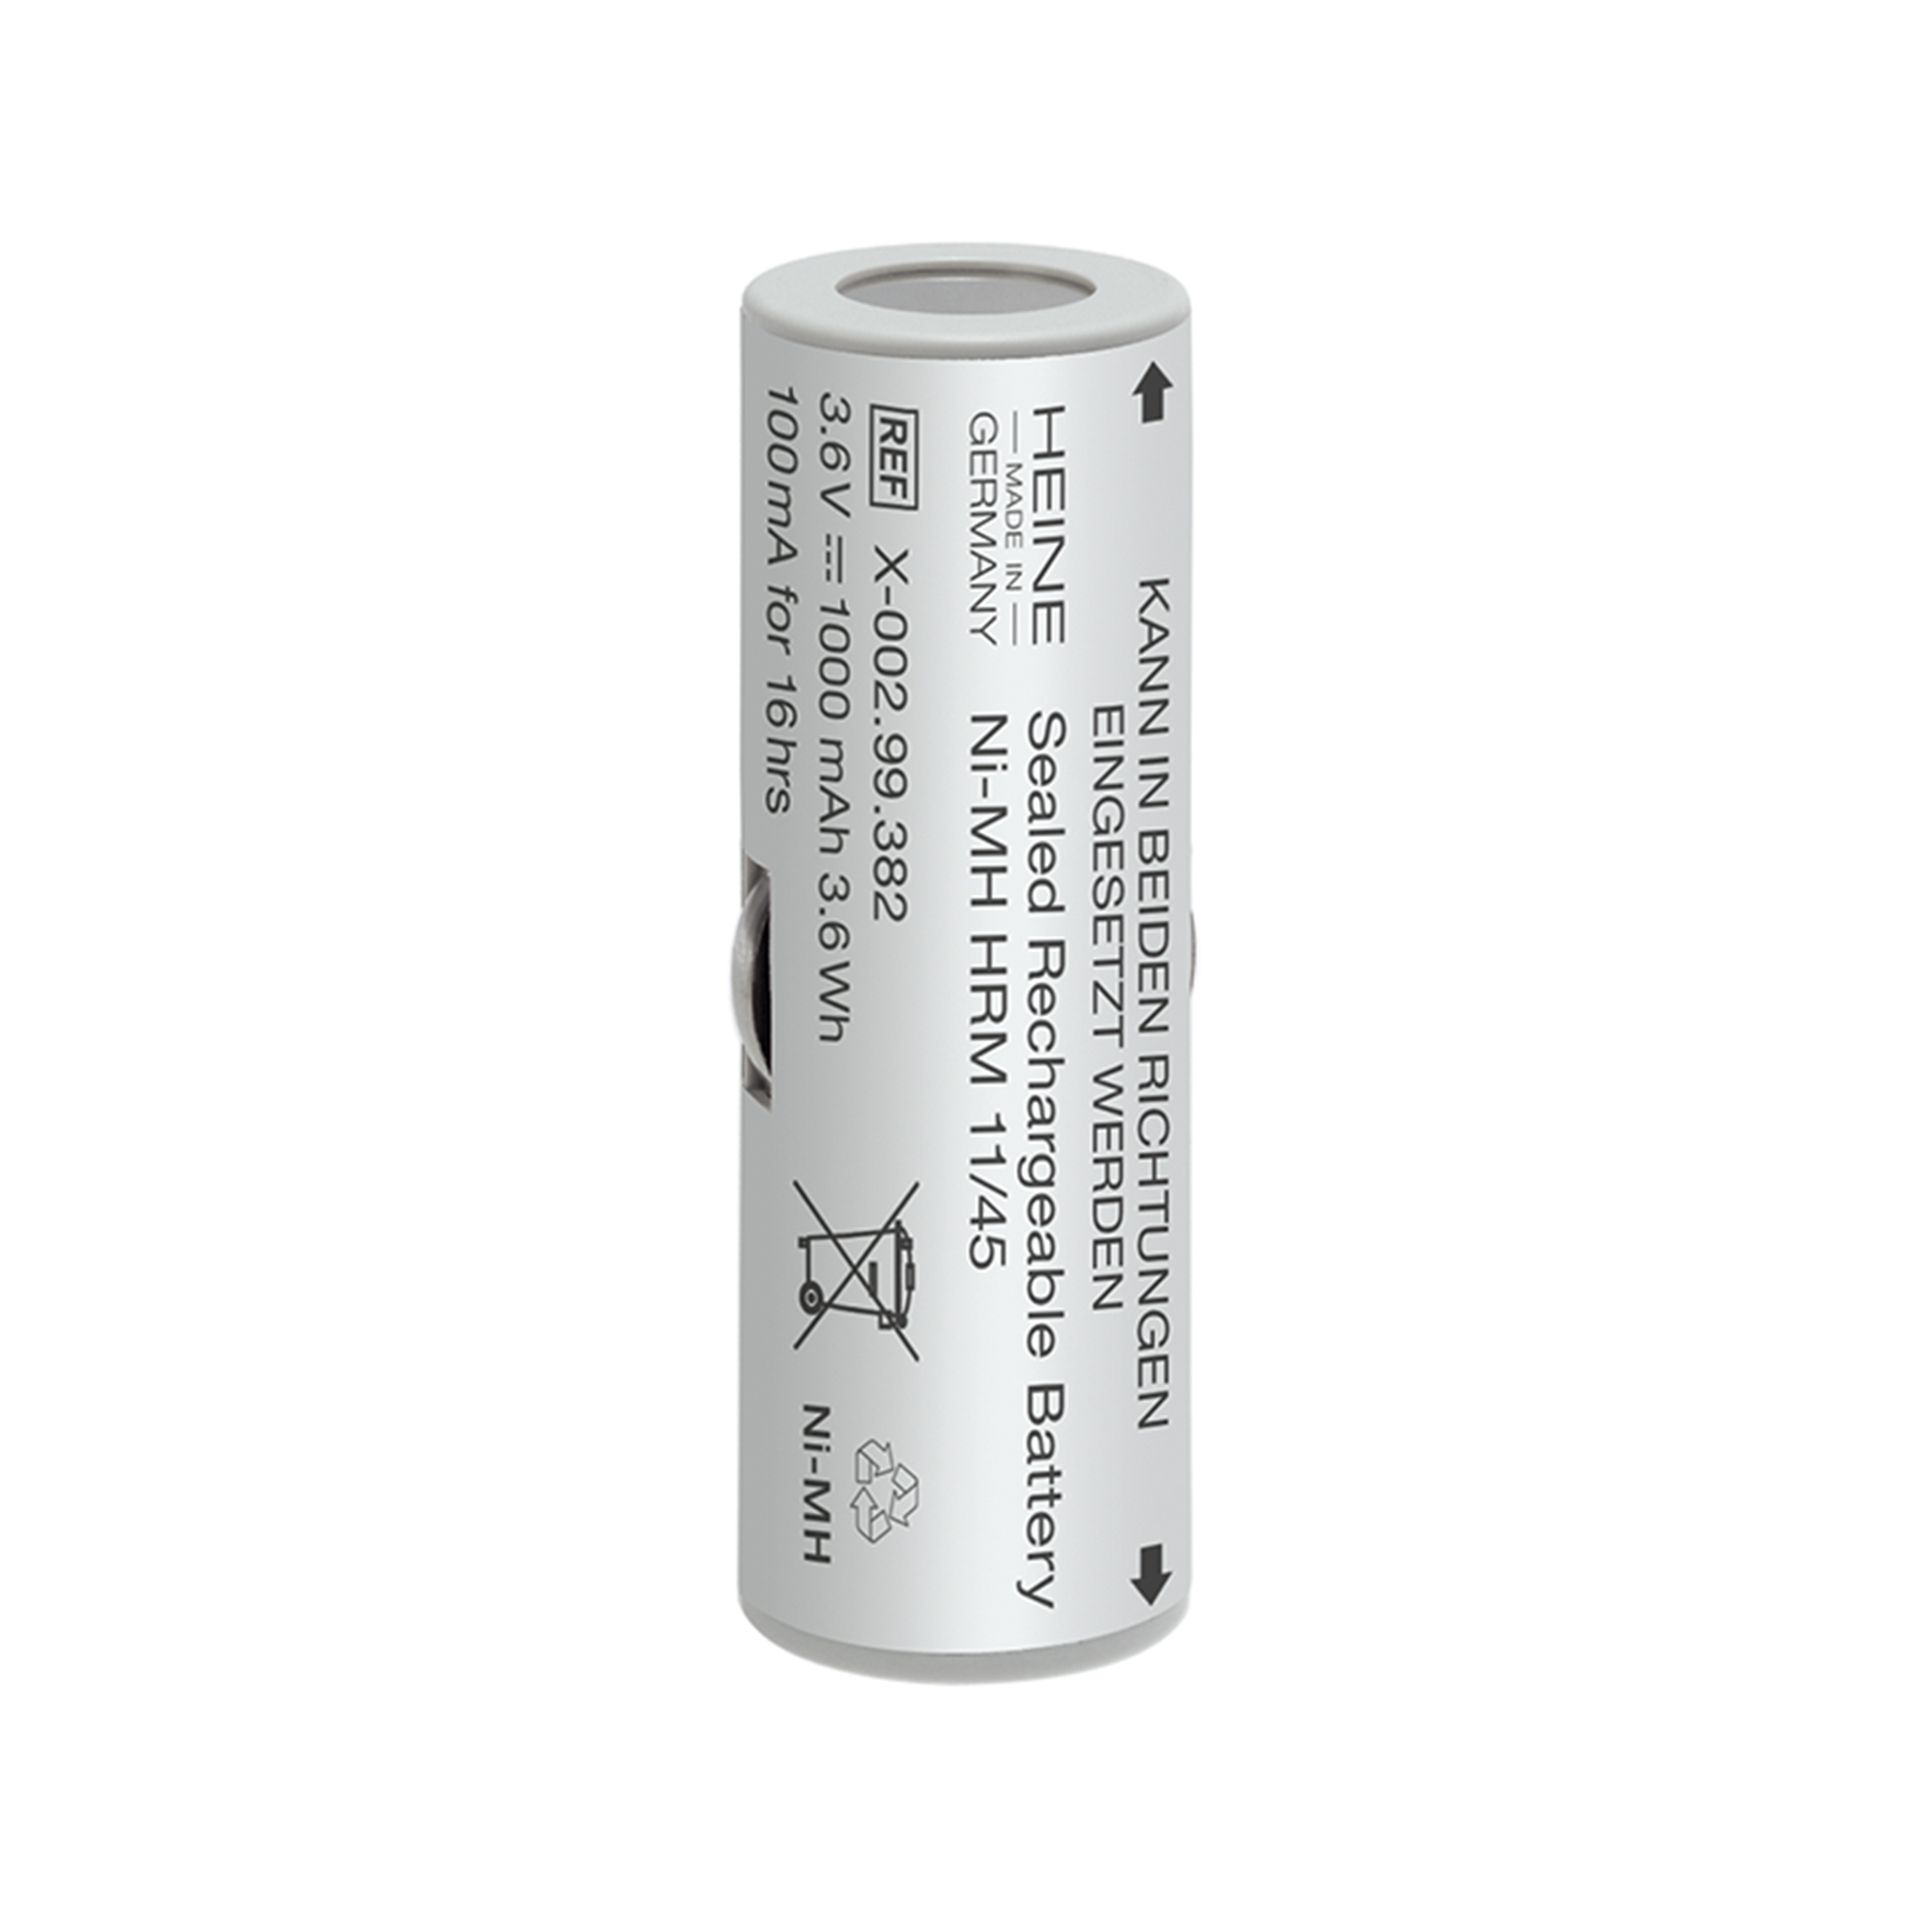 HEINE rechargeable battery 3.5 V NiMH 